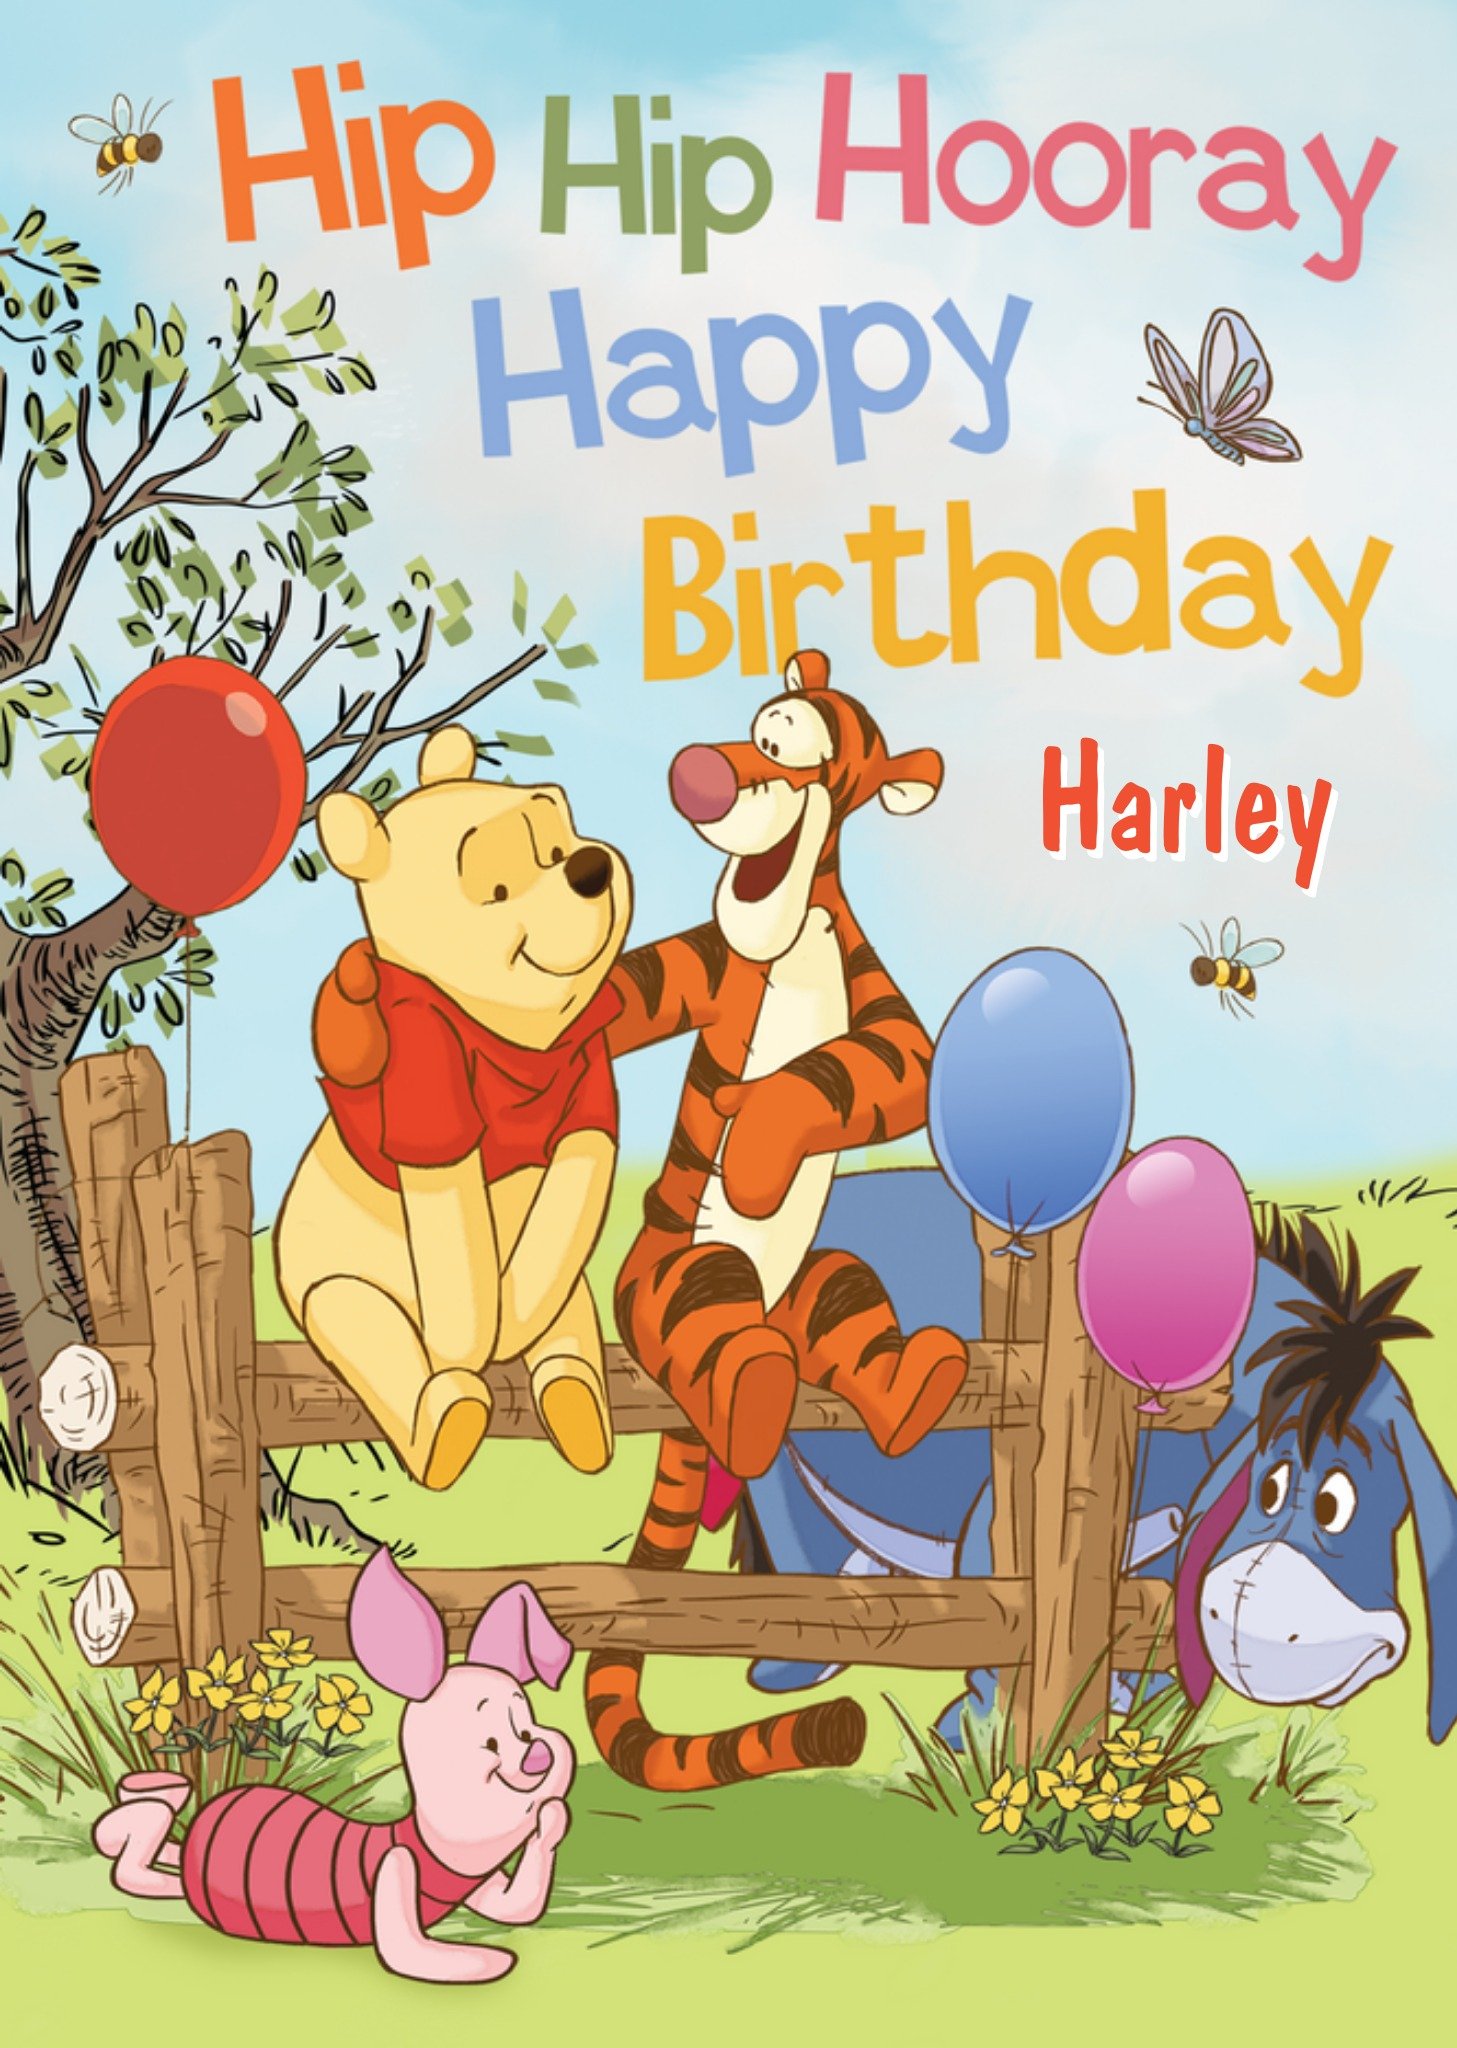 Winnie The Pooh Hip Hip Hooray Happy Birthday Card Ecard